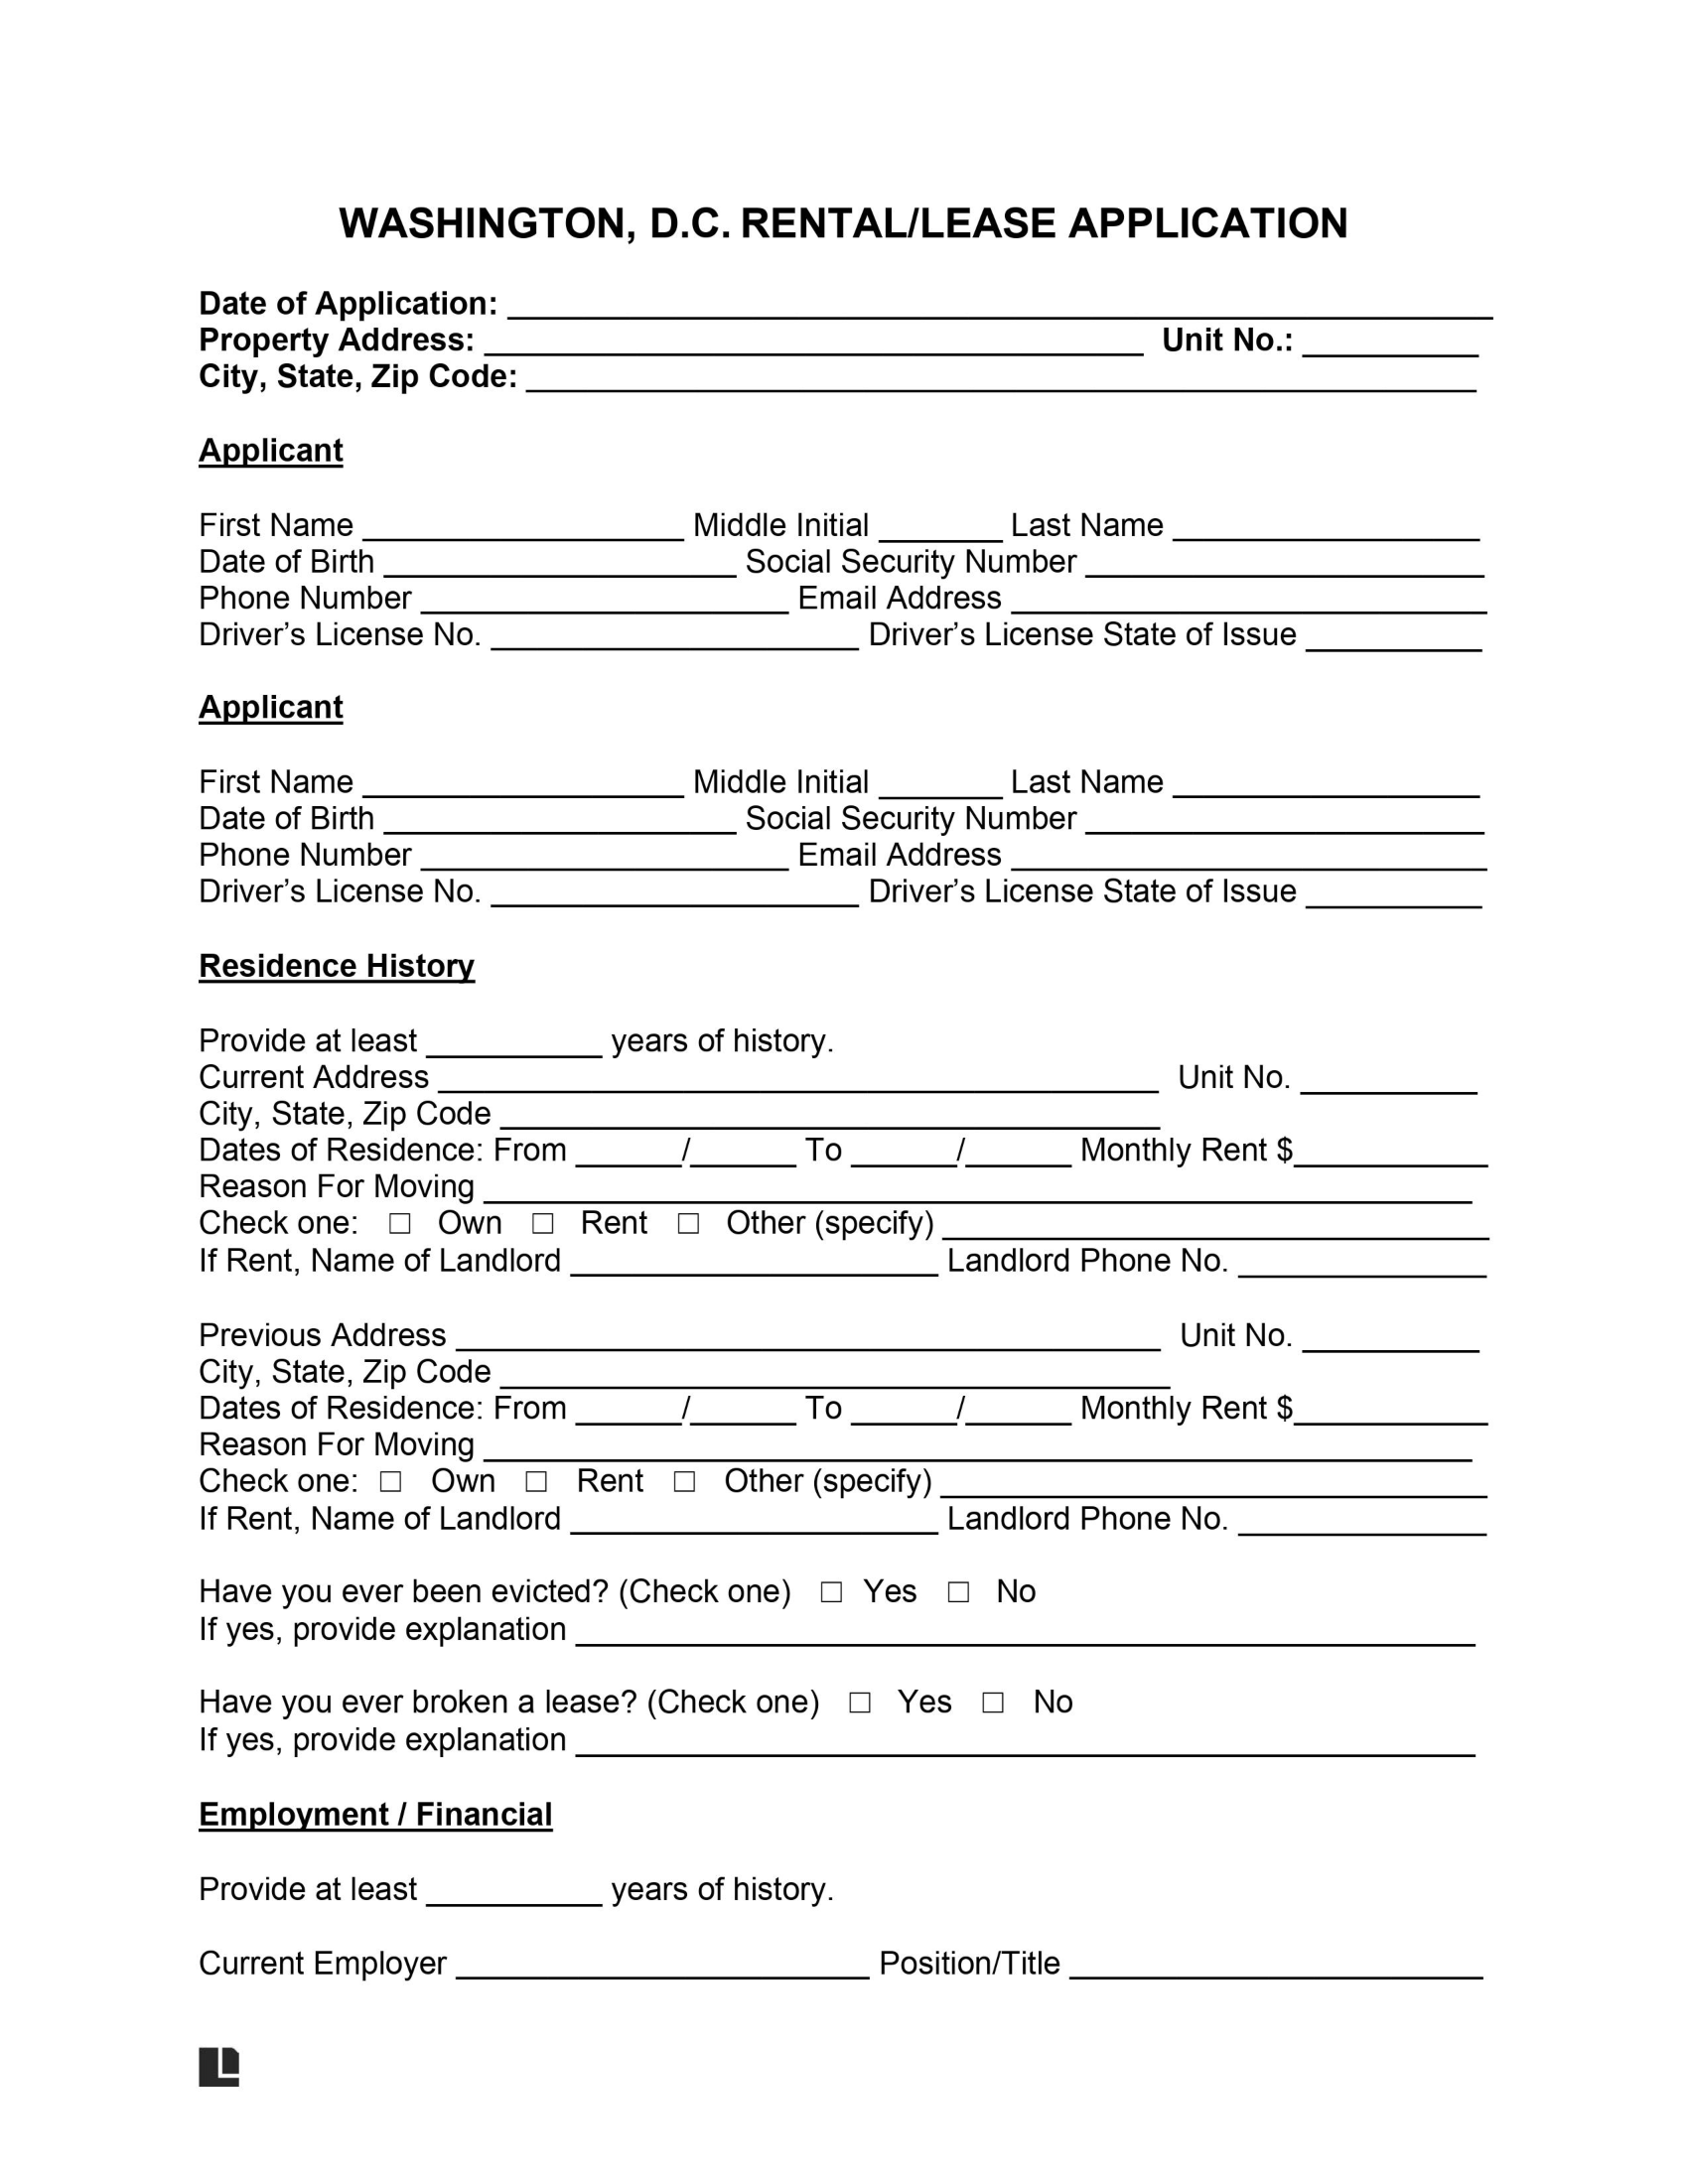 Washington, D.C. Rental Application Form